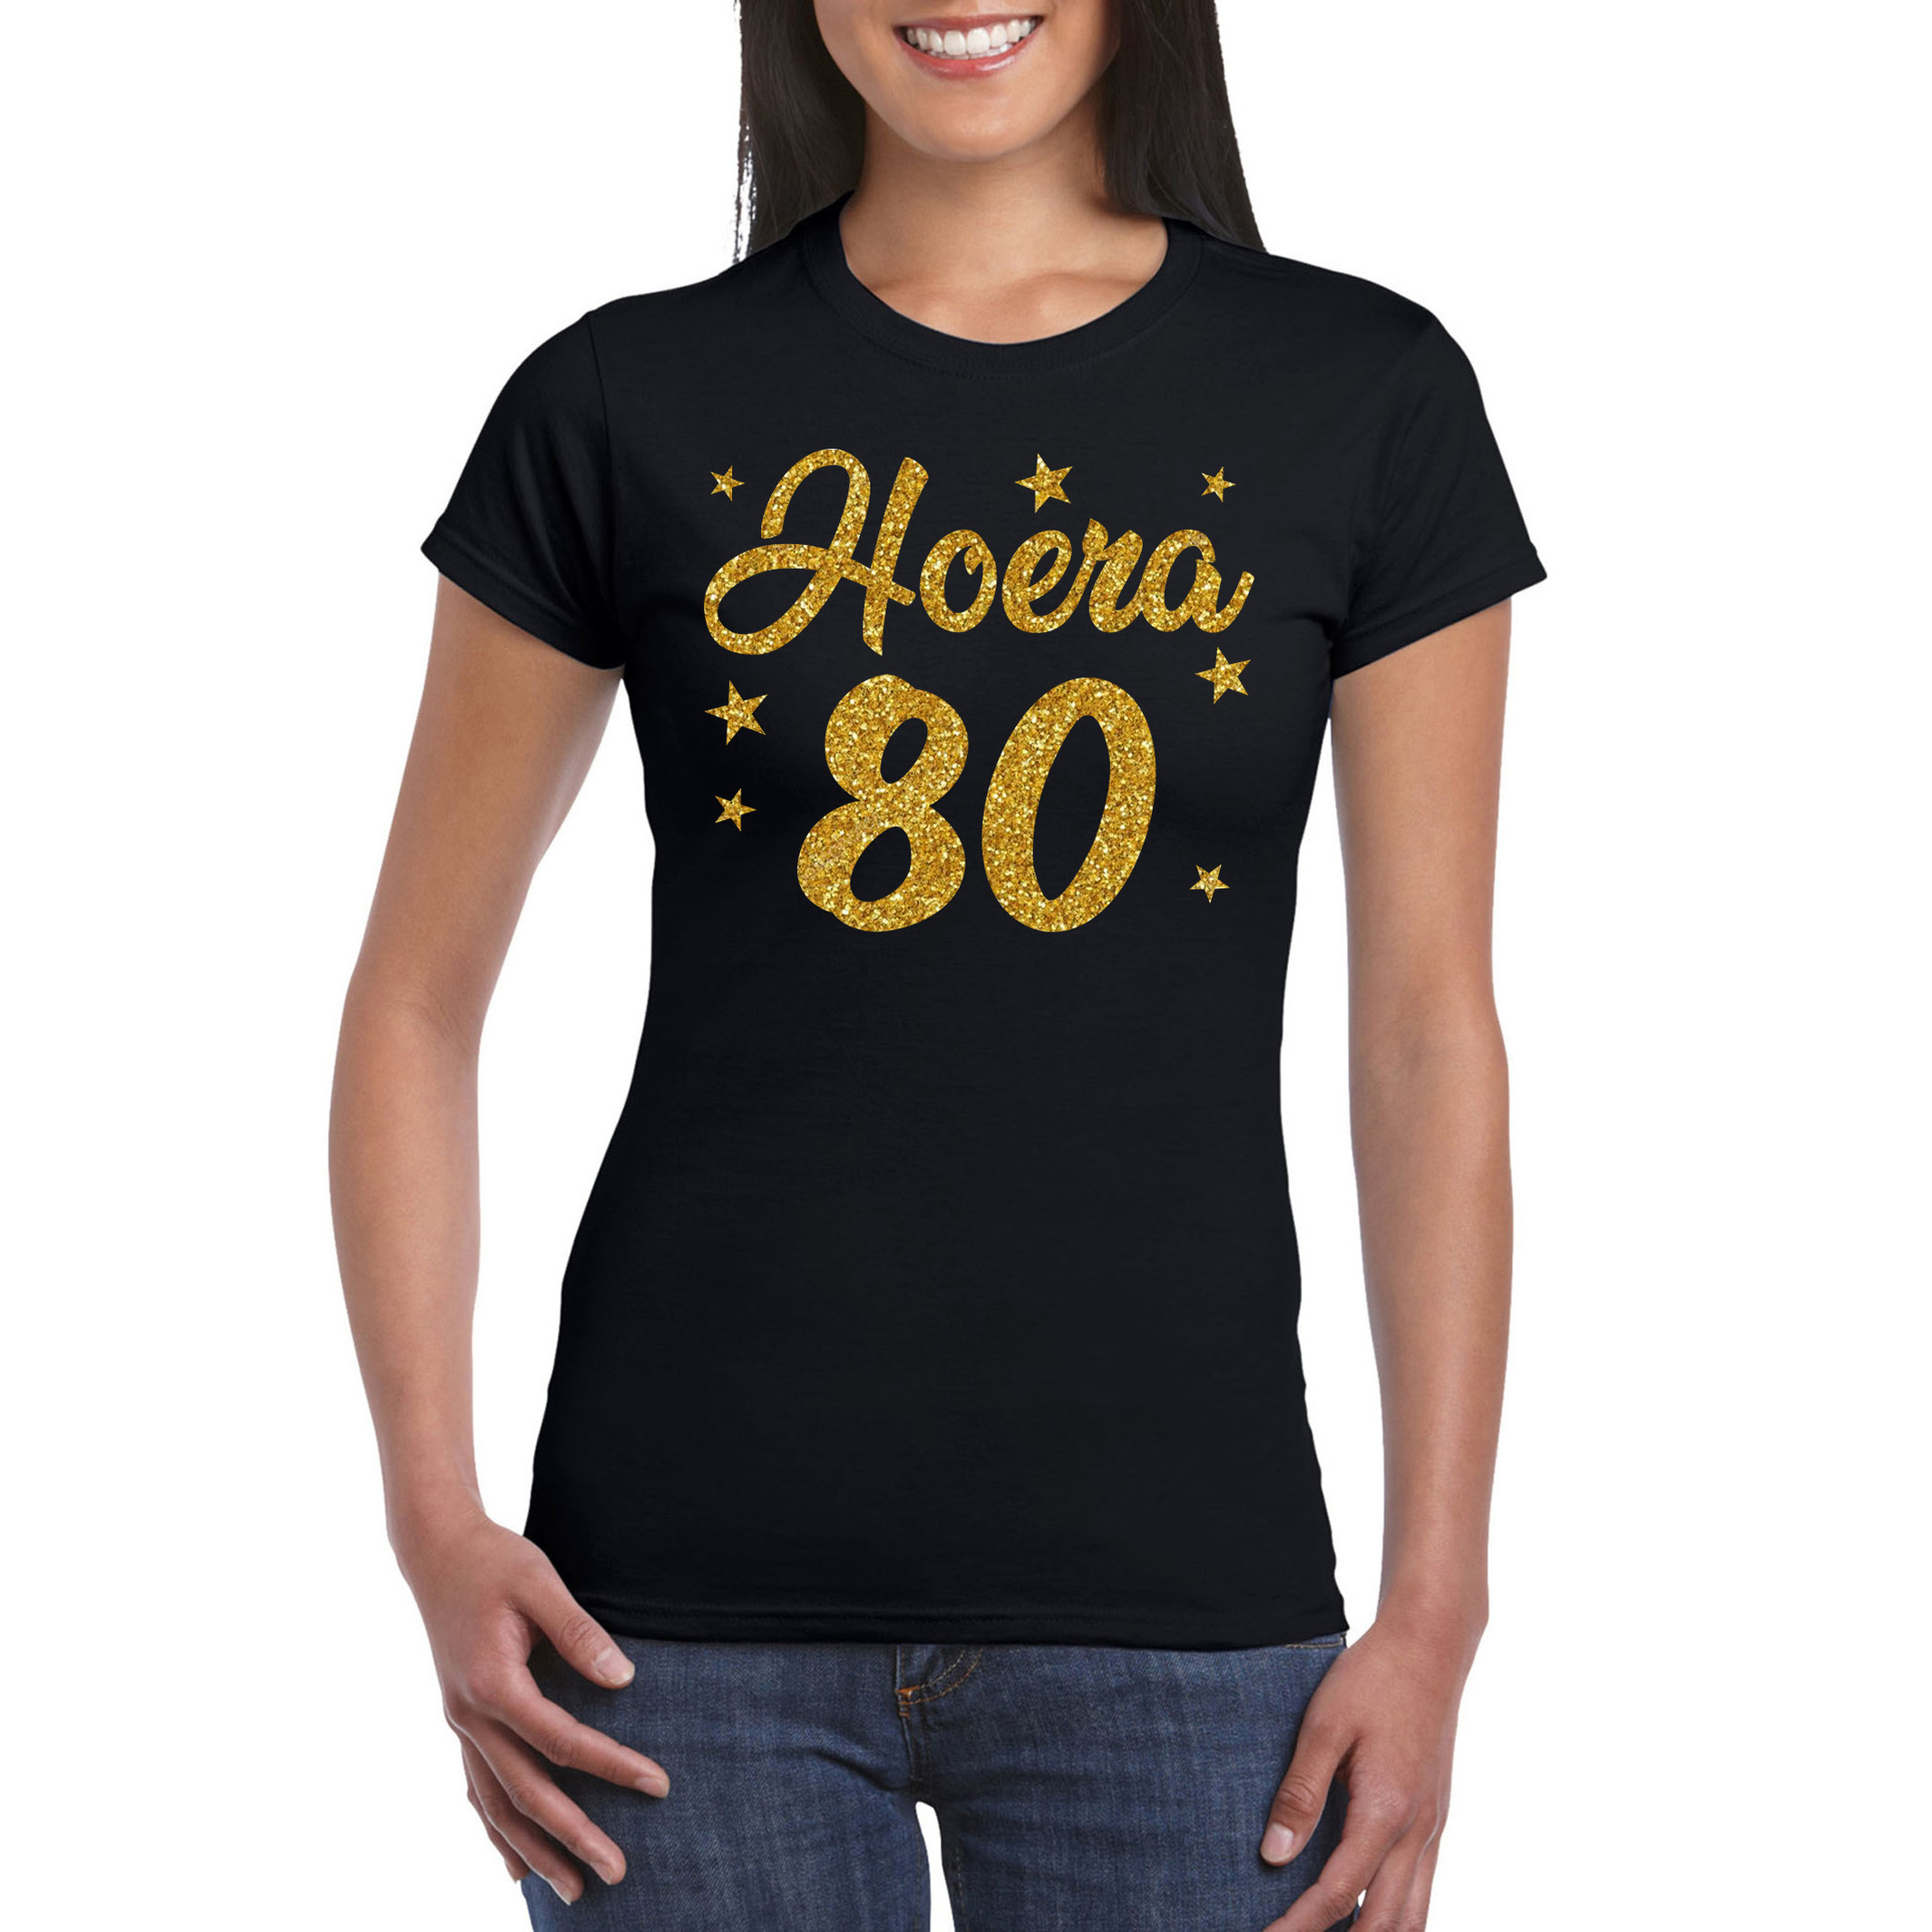 Hoera 80 jaar verjaardag cadeau t-shirt goud glitter op zwart dames